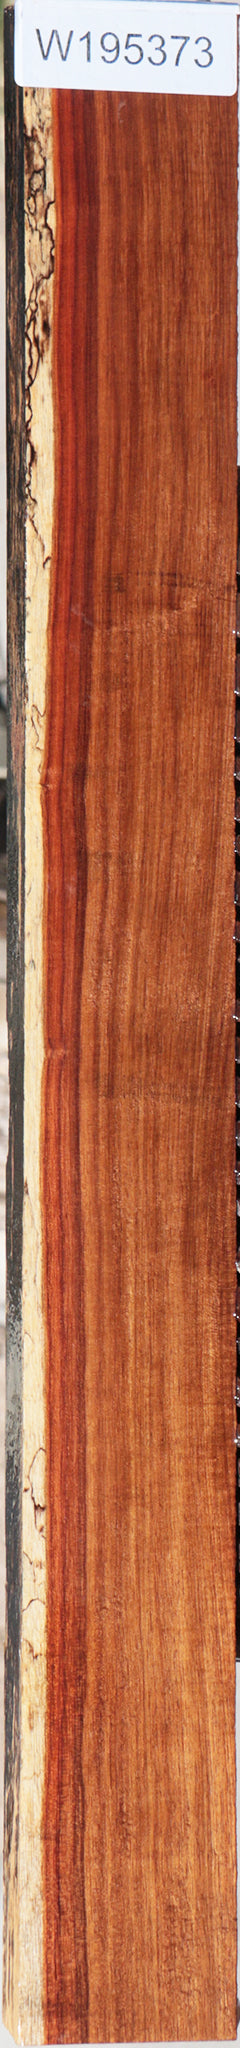 Spalted Granadillo Lumber